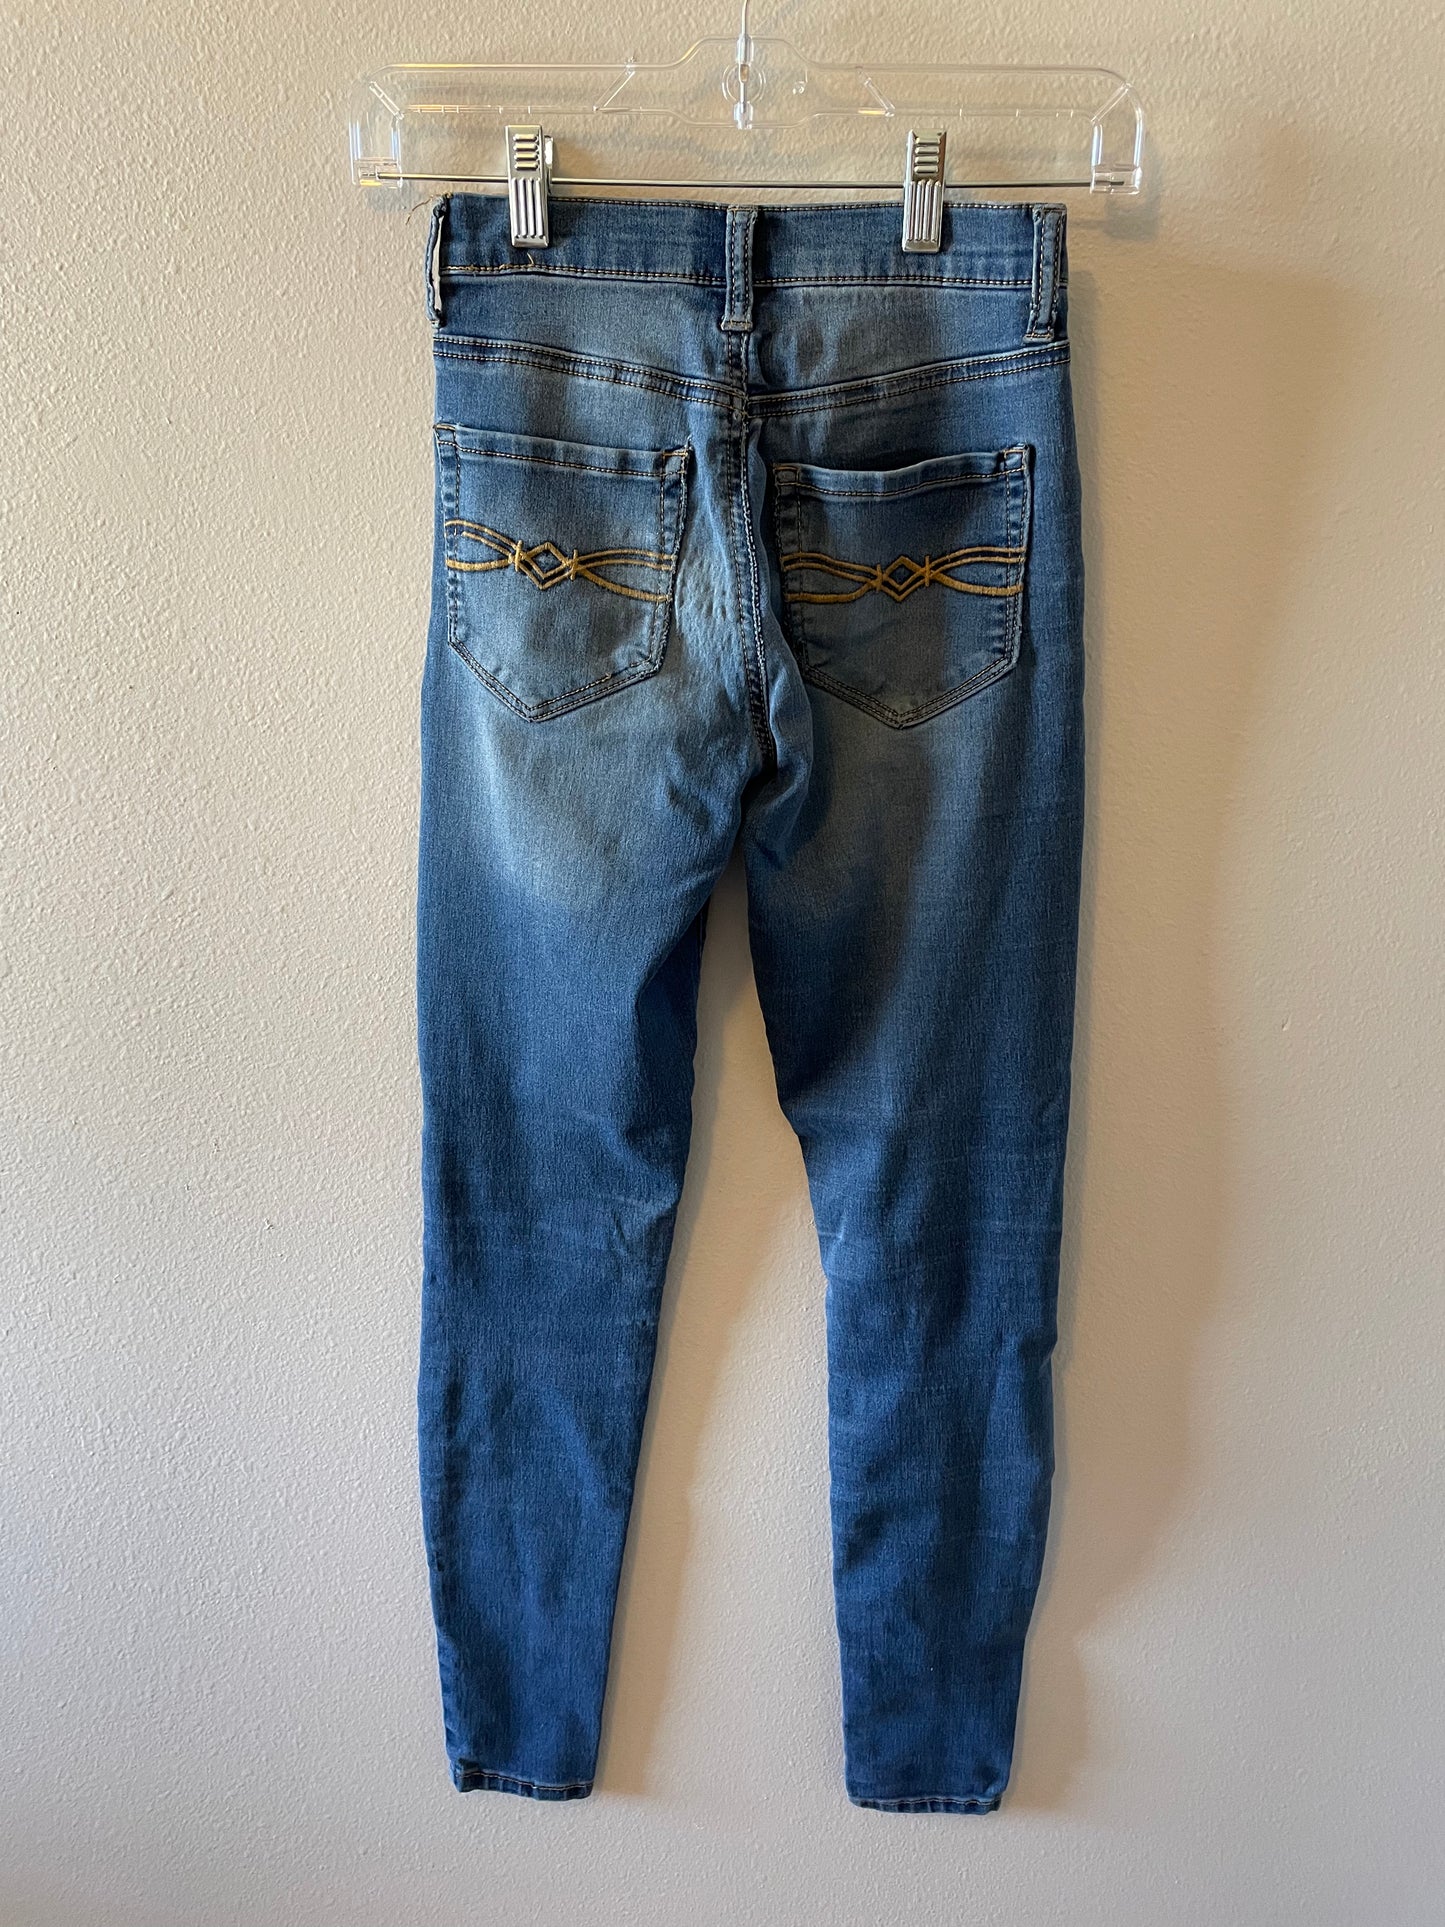 Mudd Jegging Jeans (0)